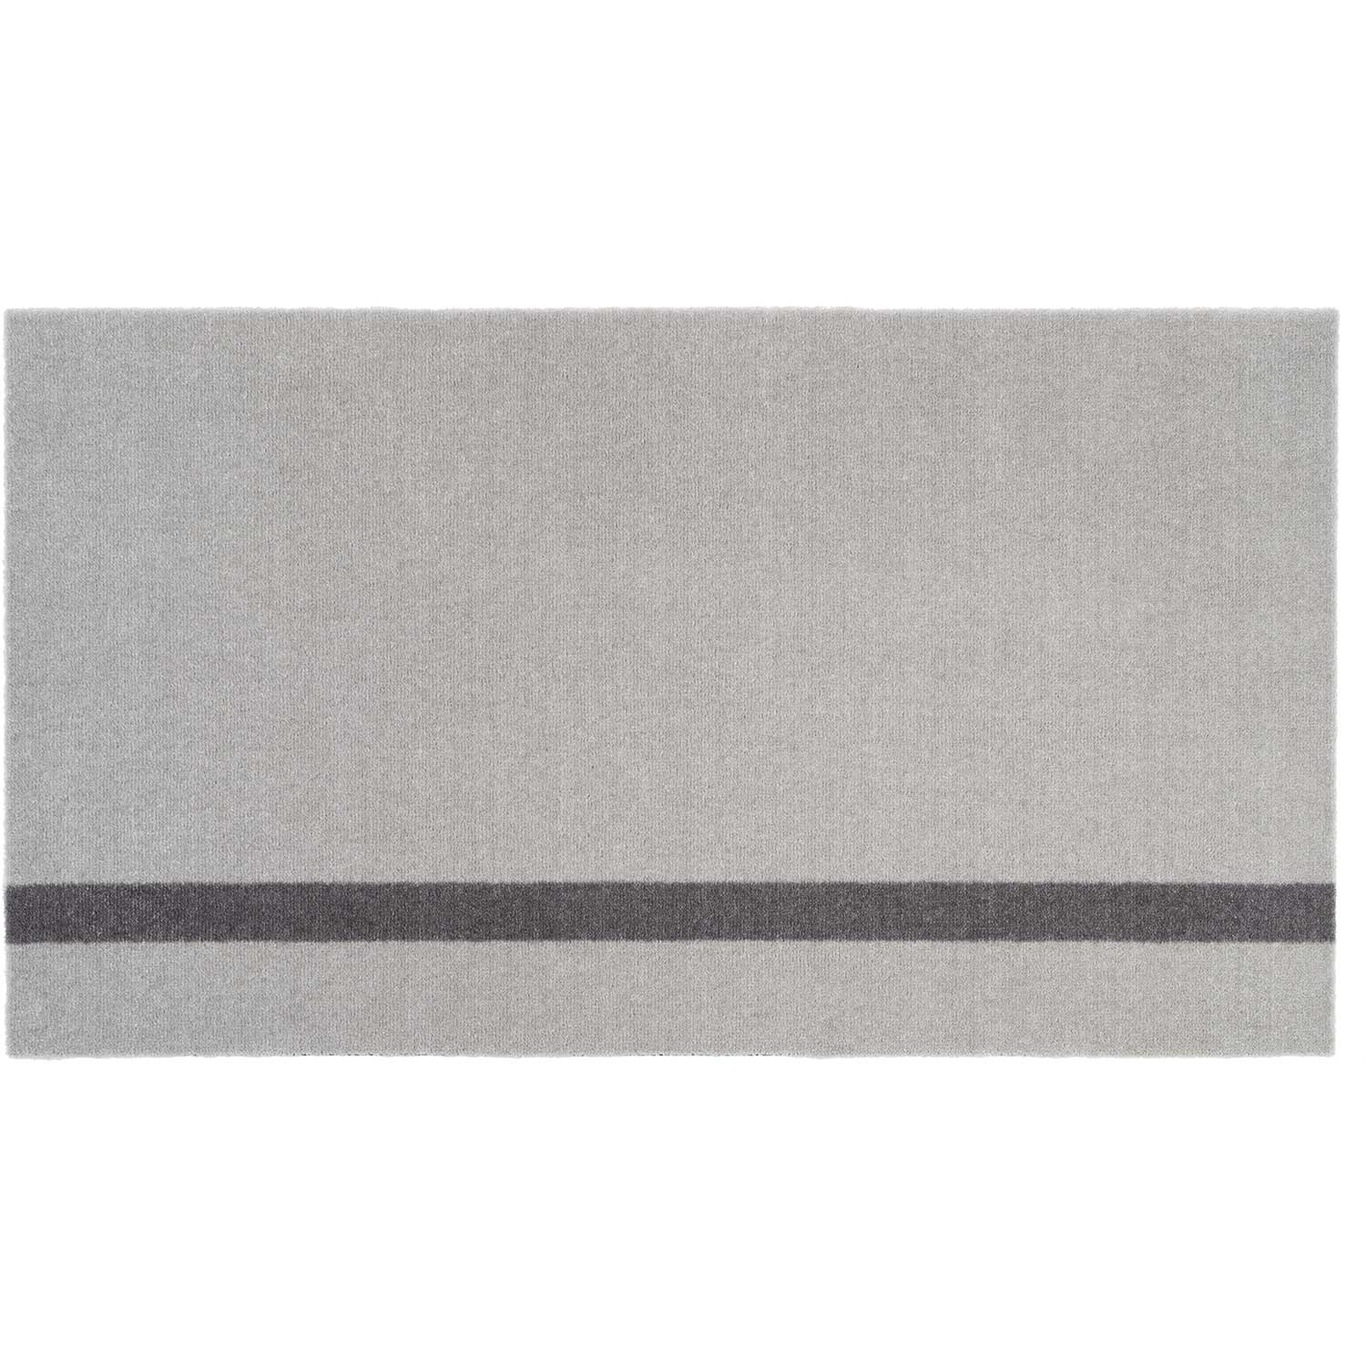 Stripes Vertikal Tæppe Lysegråt / Steel Grey, 67x120 cm